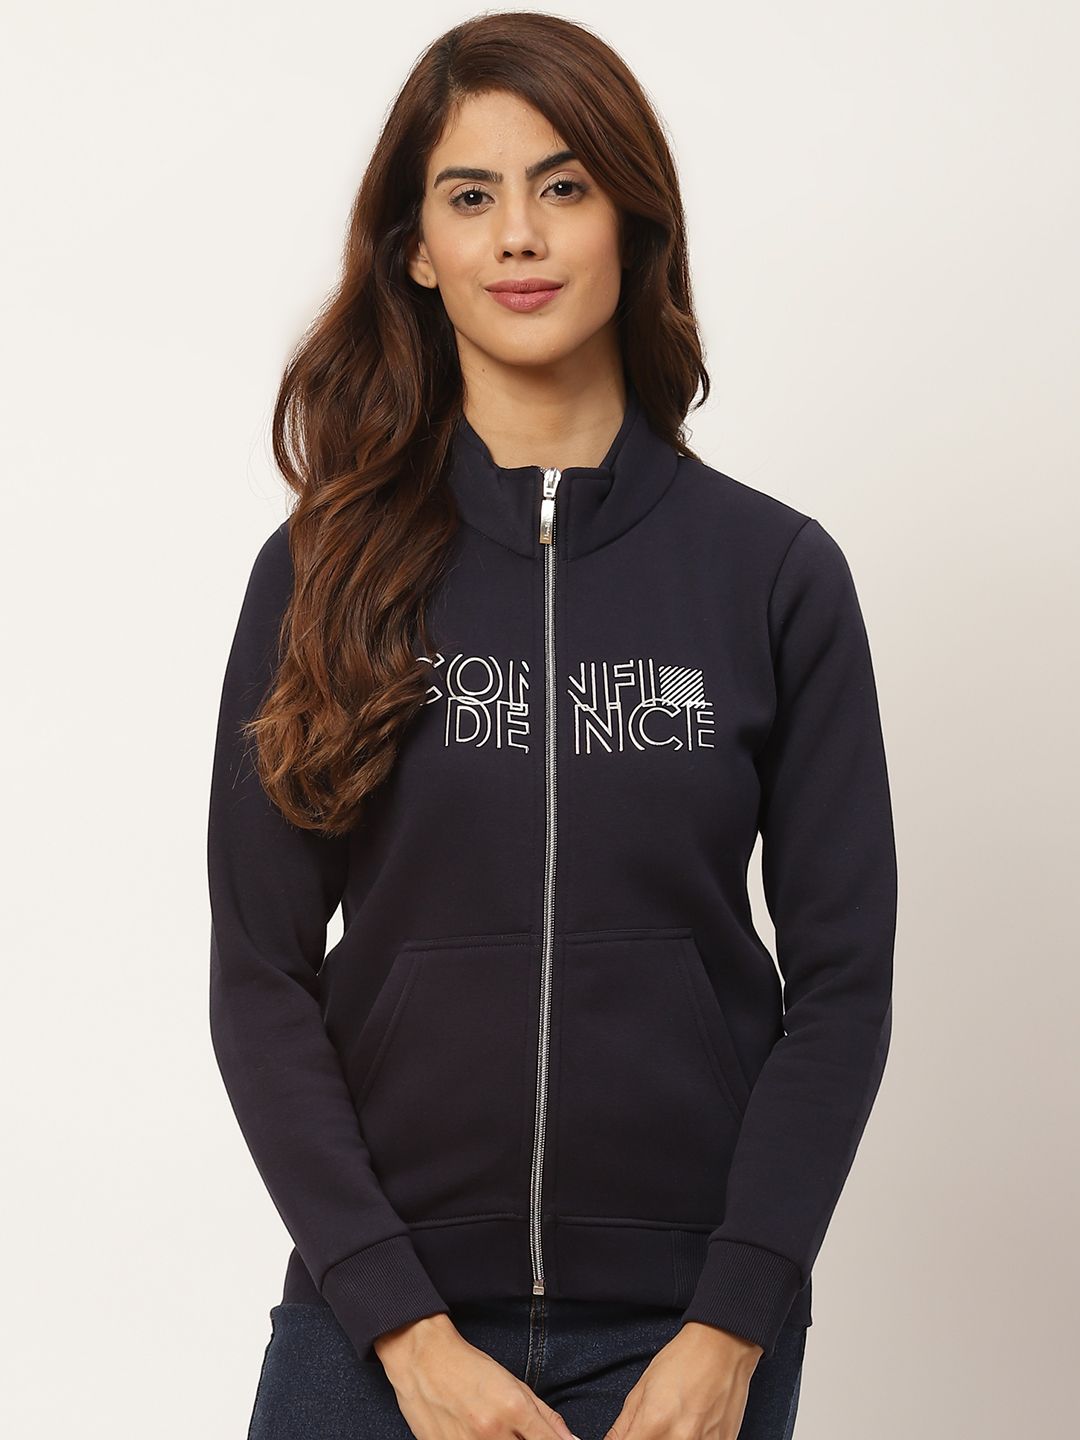 Monte Carlo Women Navy Blue Printed Sweatshirt Price in India